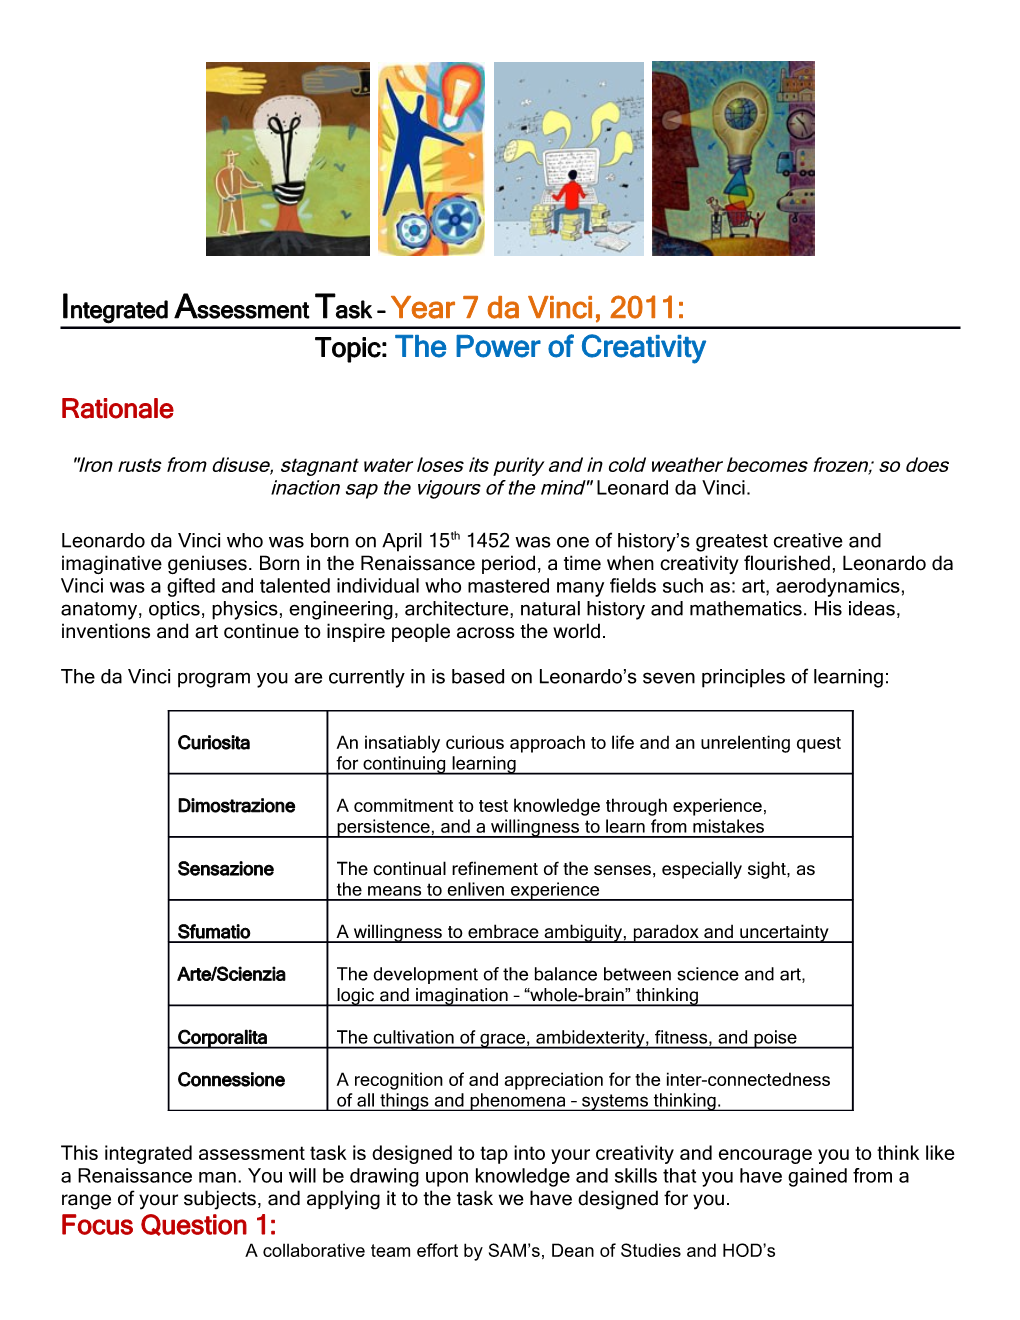 Integrated Assessment Task Year 7 Da Vinci, 2011